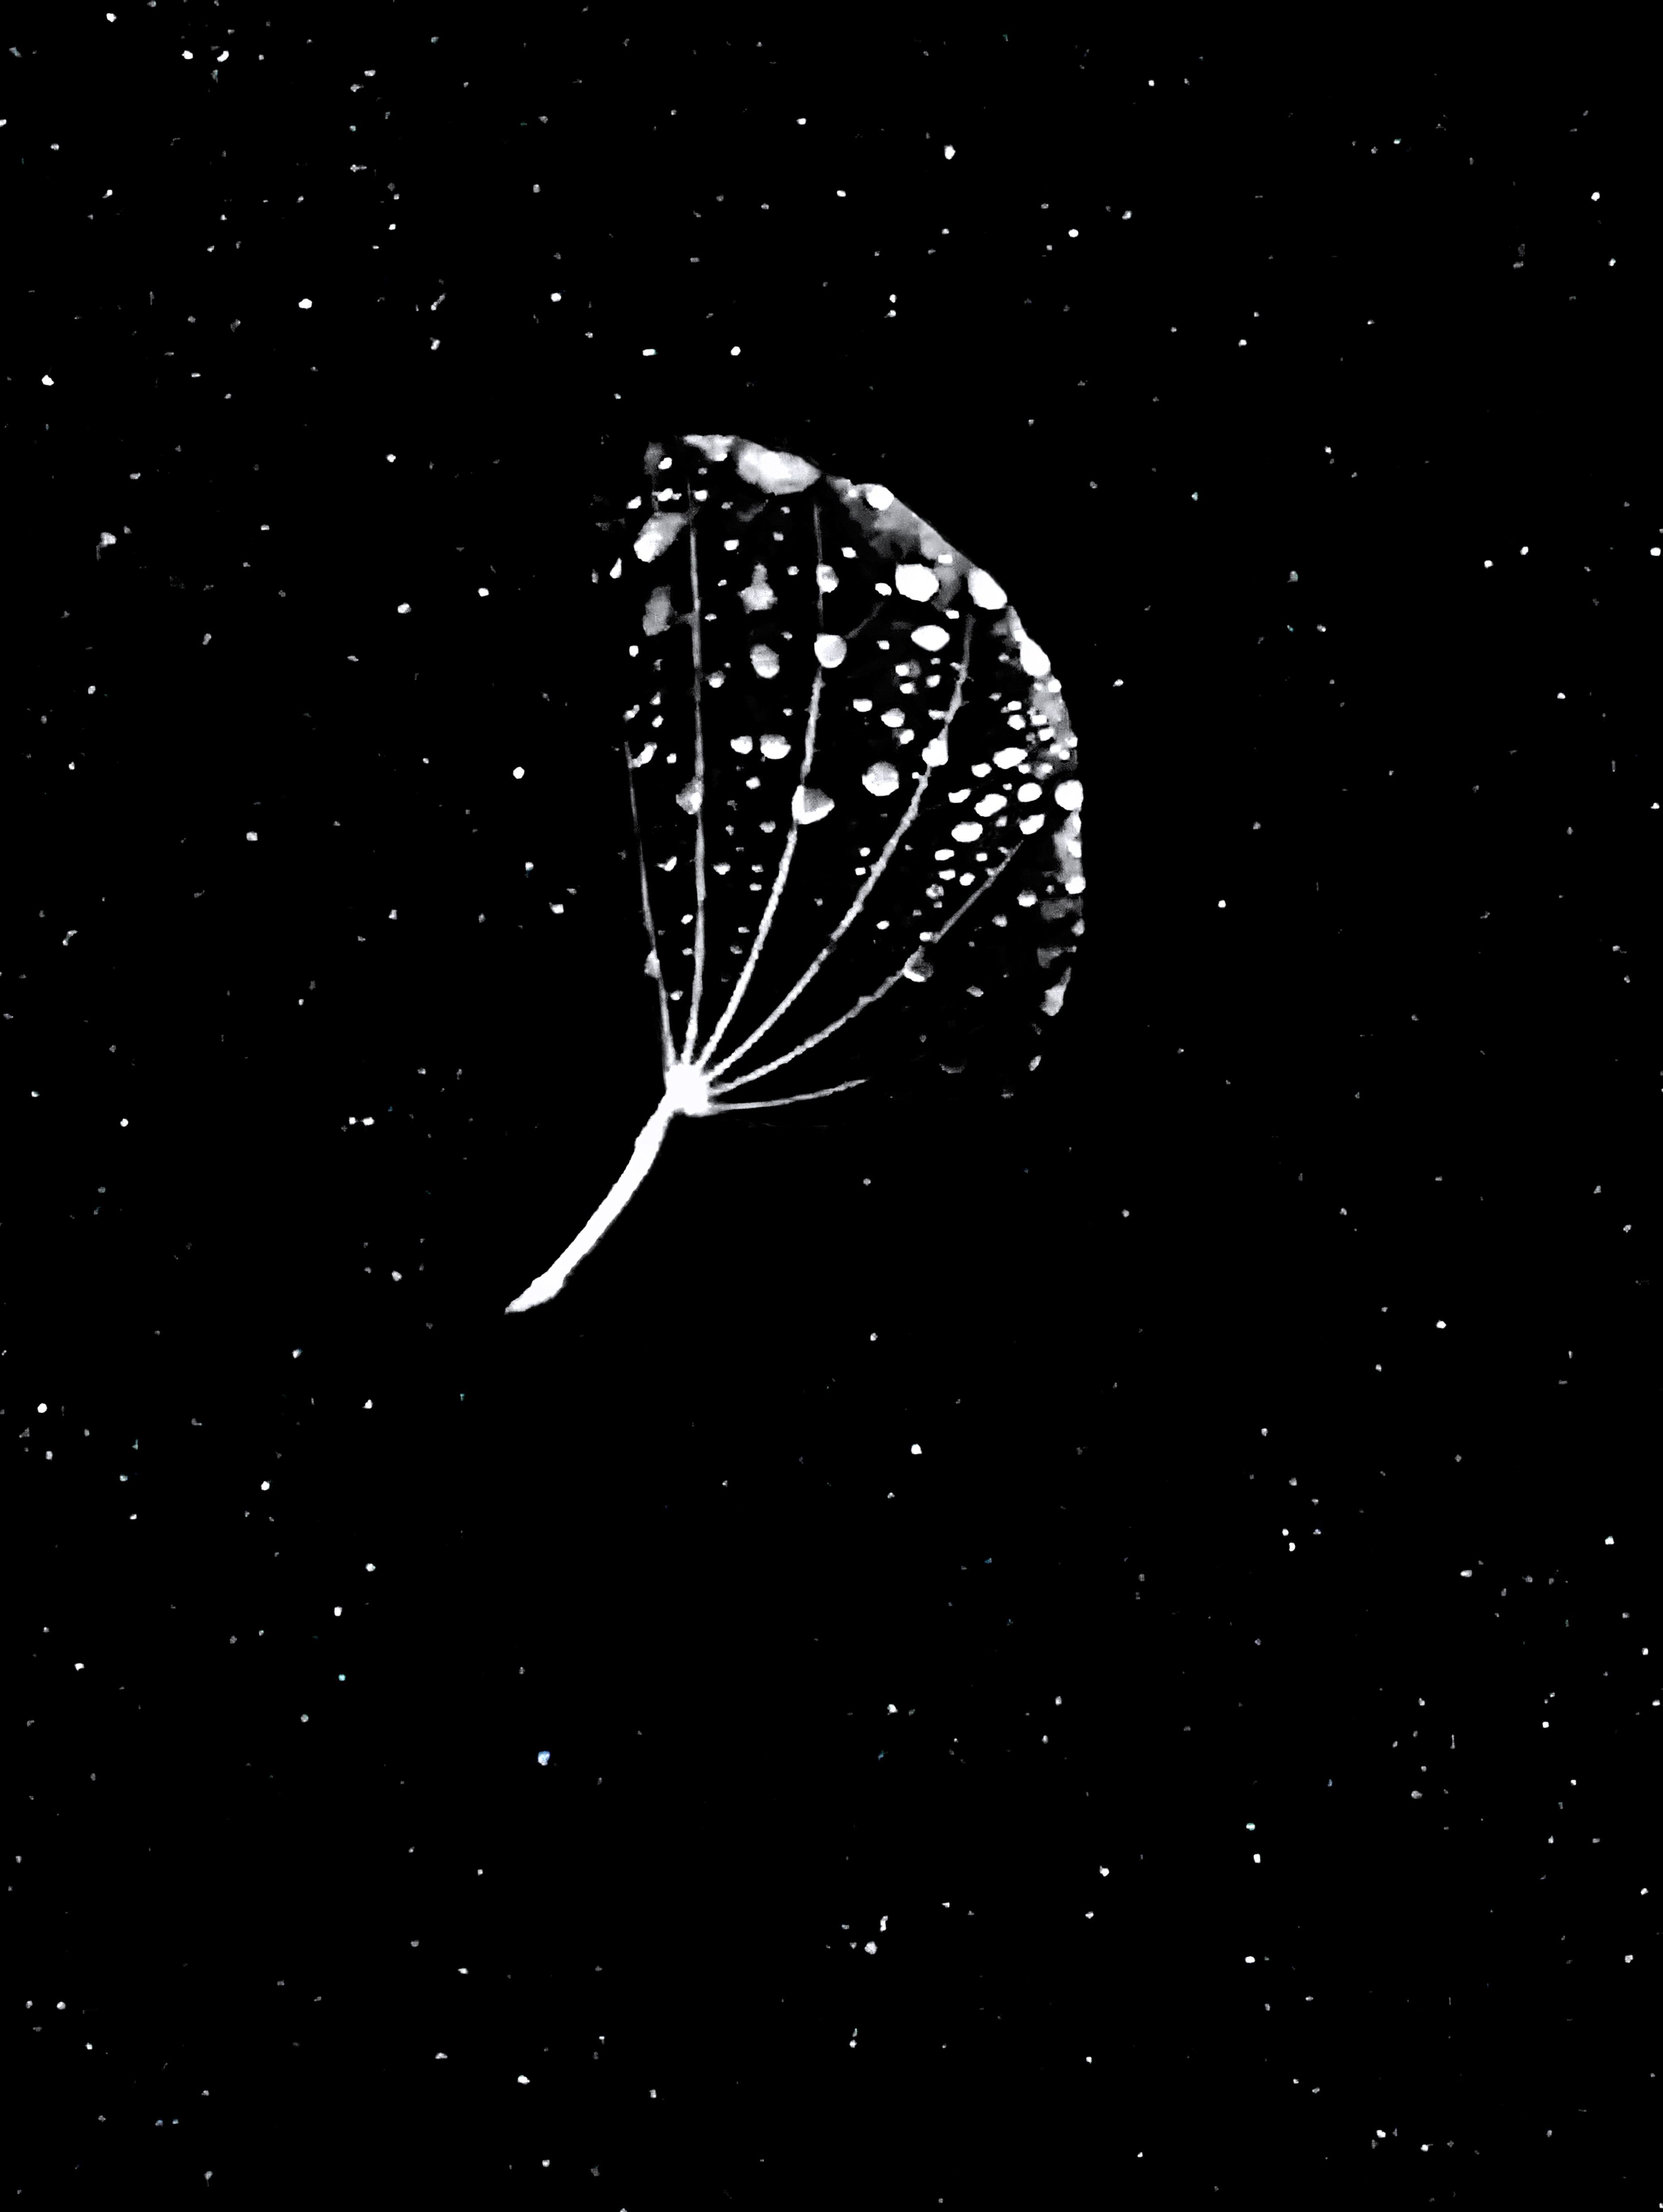 Tiny Immensity #14 - Ginko Star Rain ©2020 L. Aviva Diamond